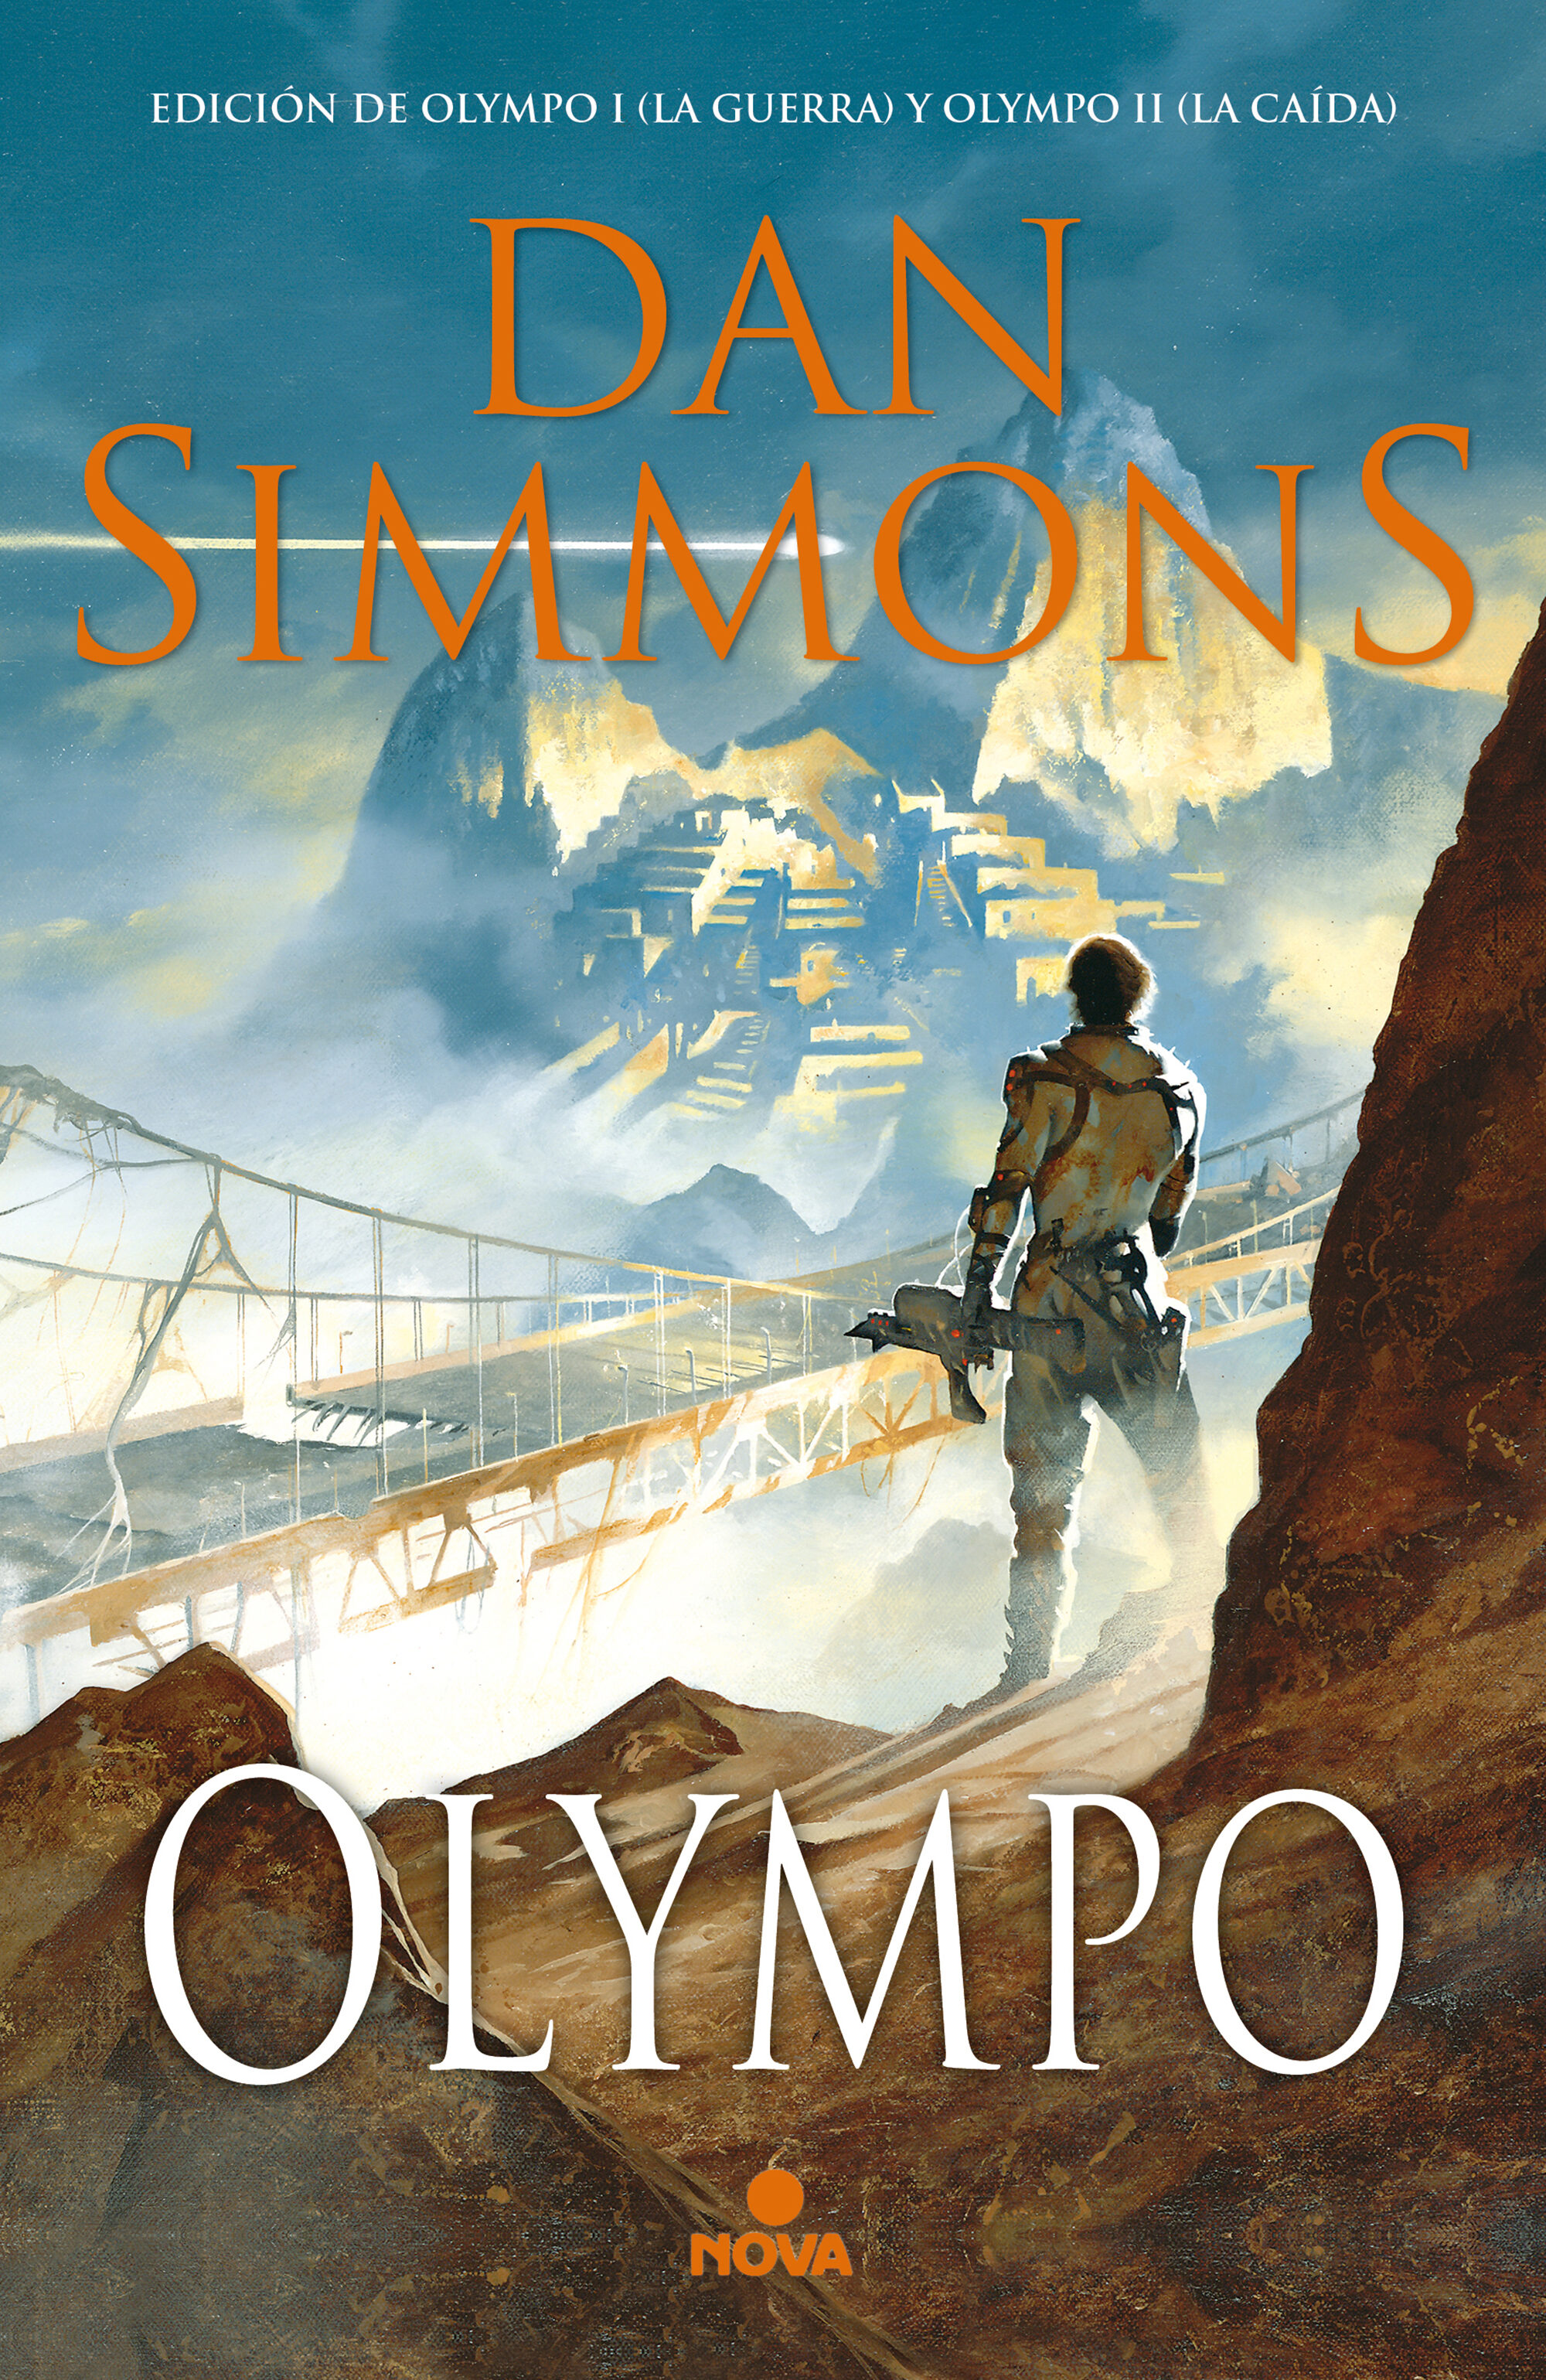 Dan Simmons, Rafael Marín Trechera: Olympo (Spanish language, 2019, Nova)